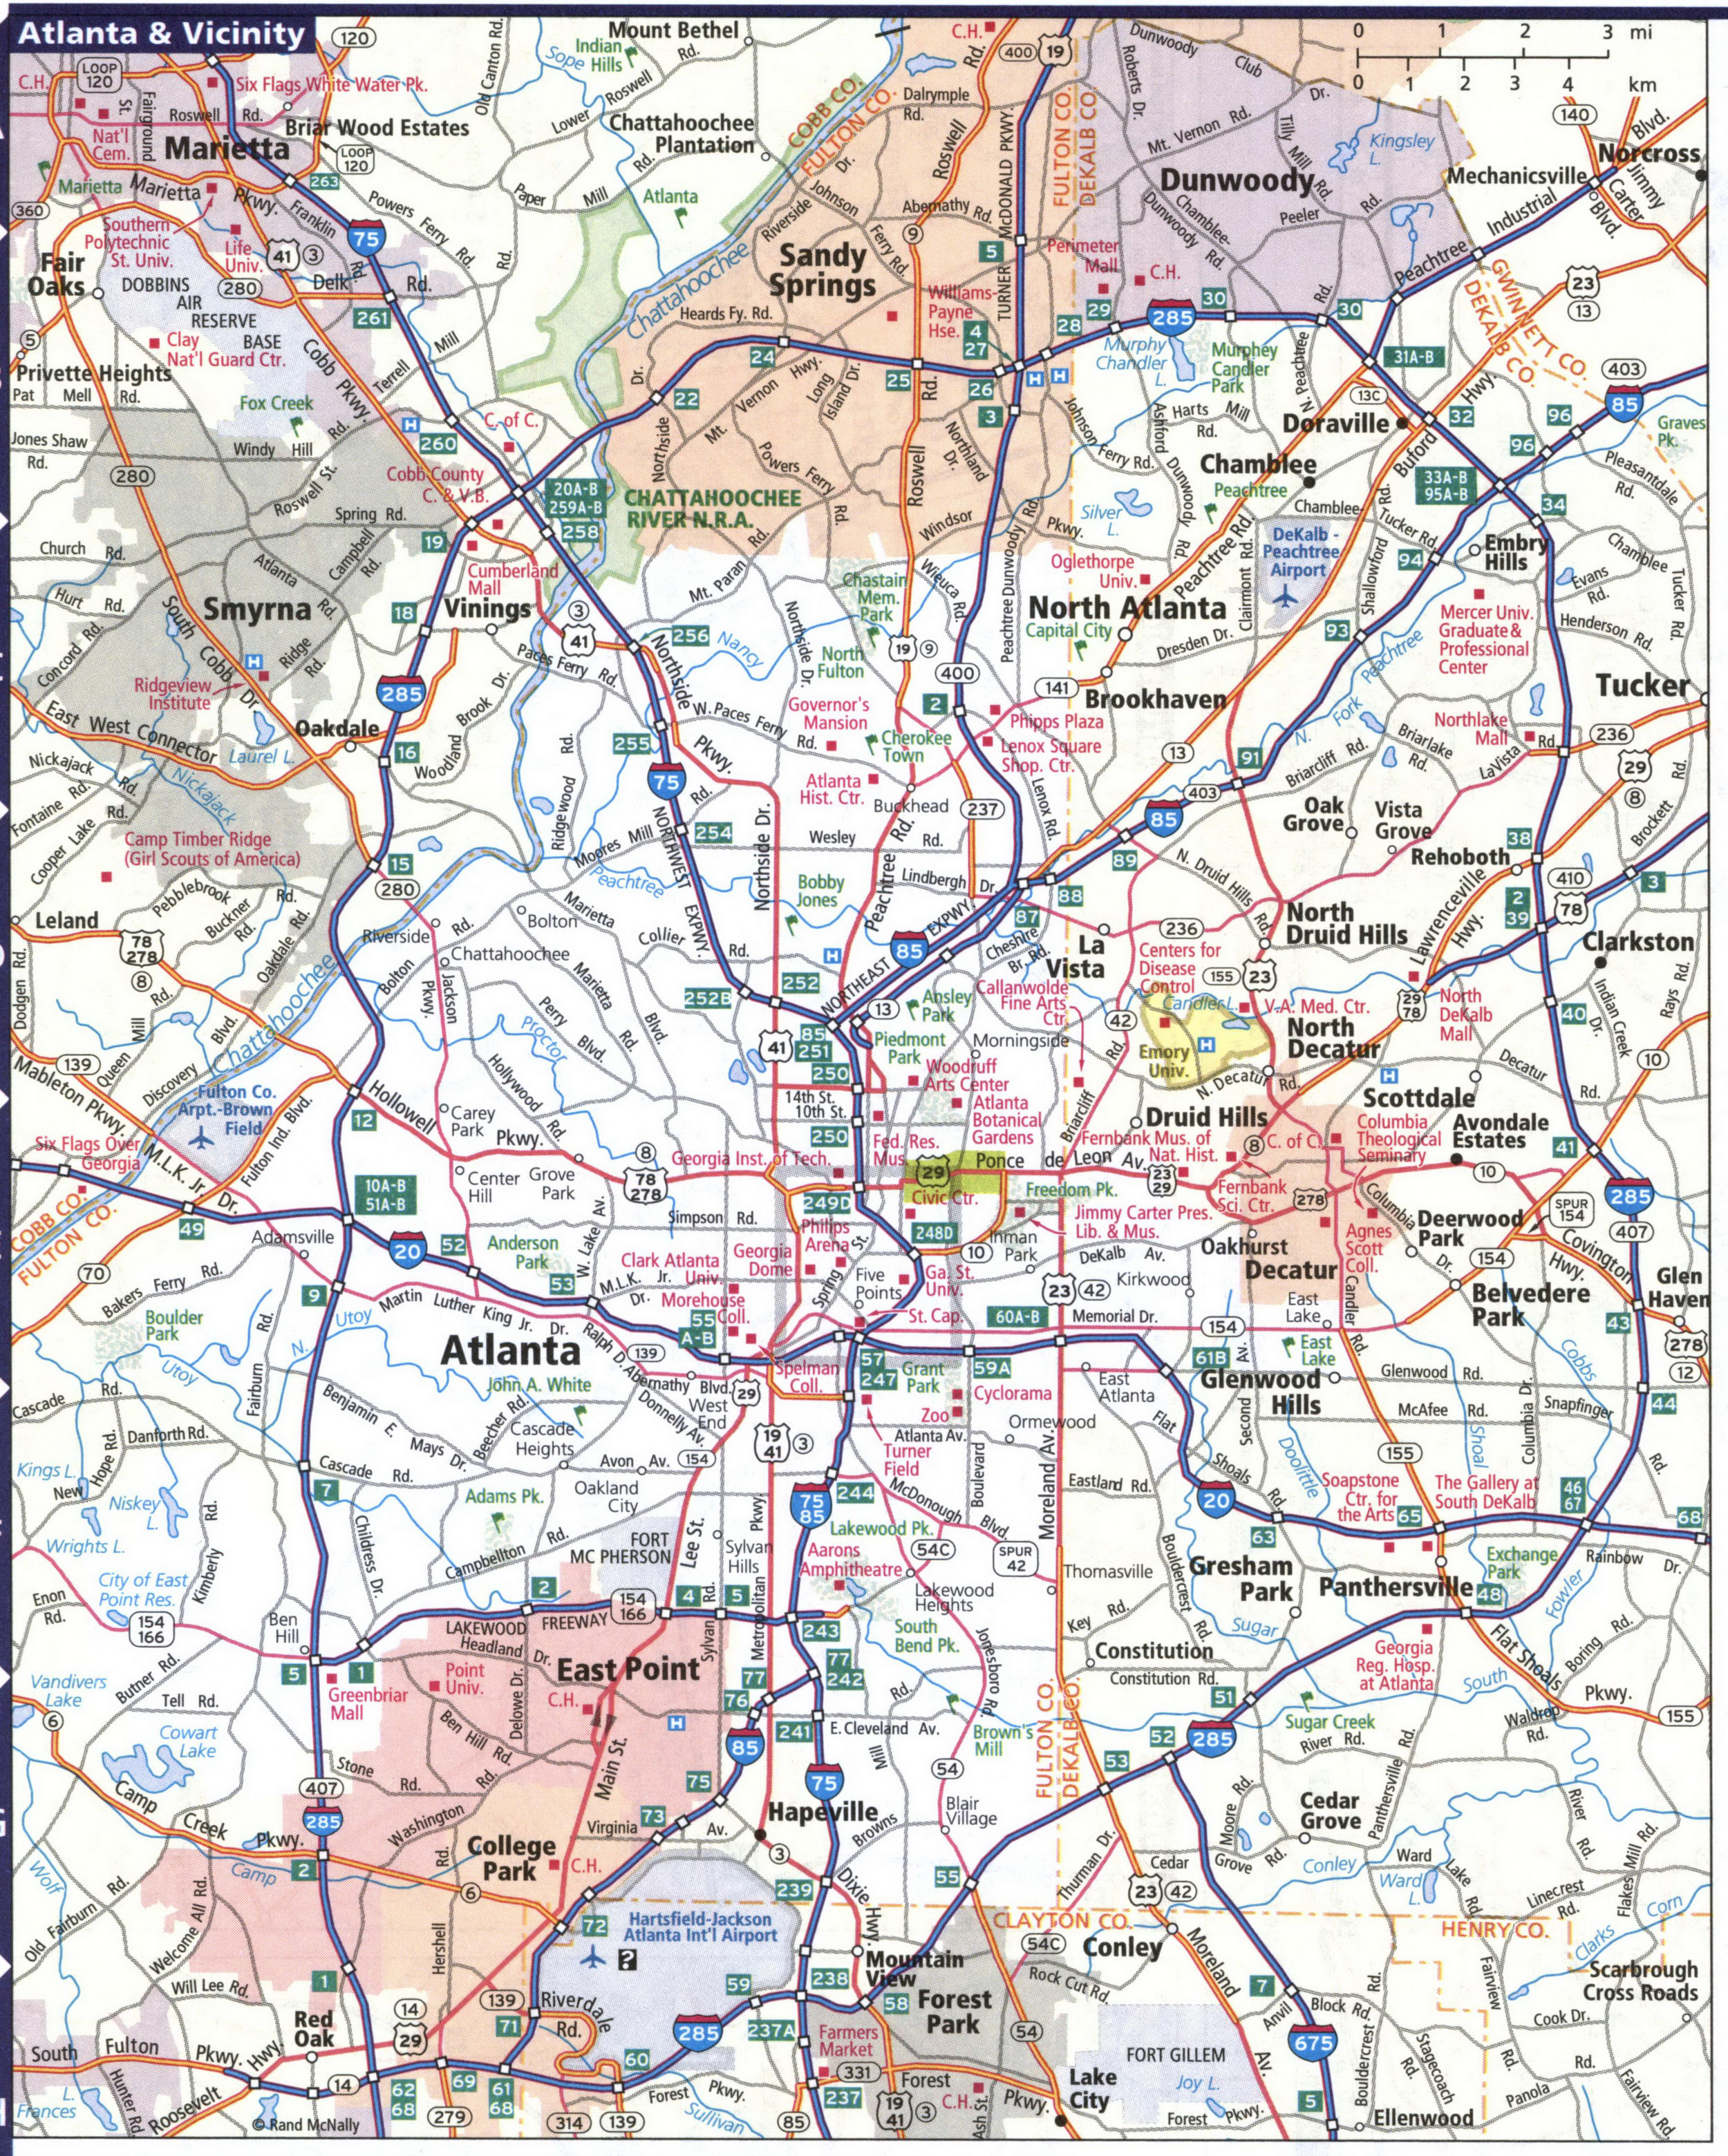 Map of Atlanta area